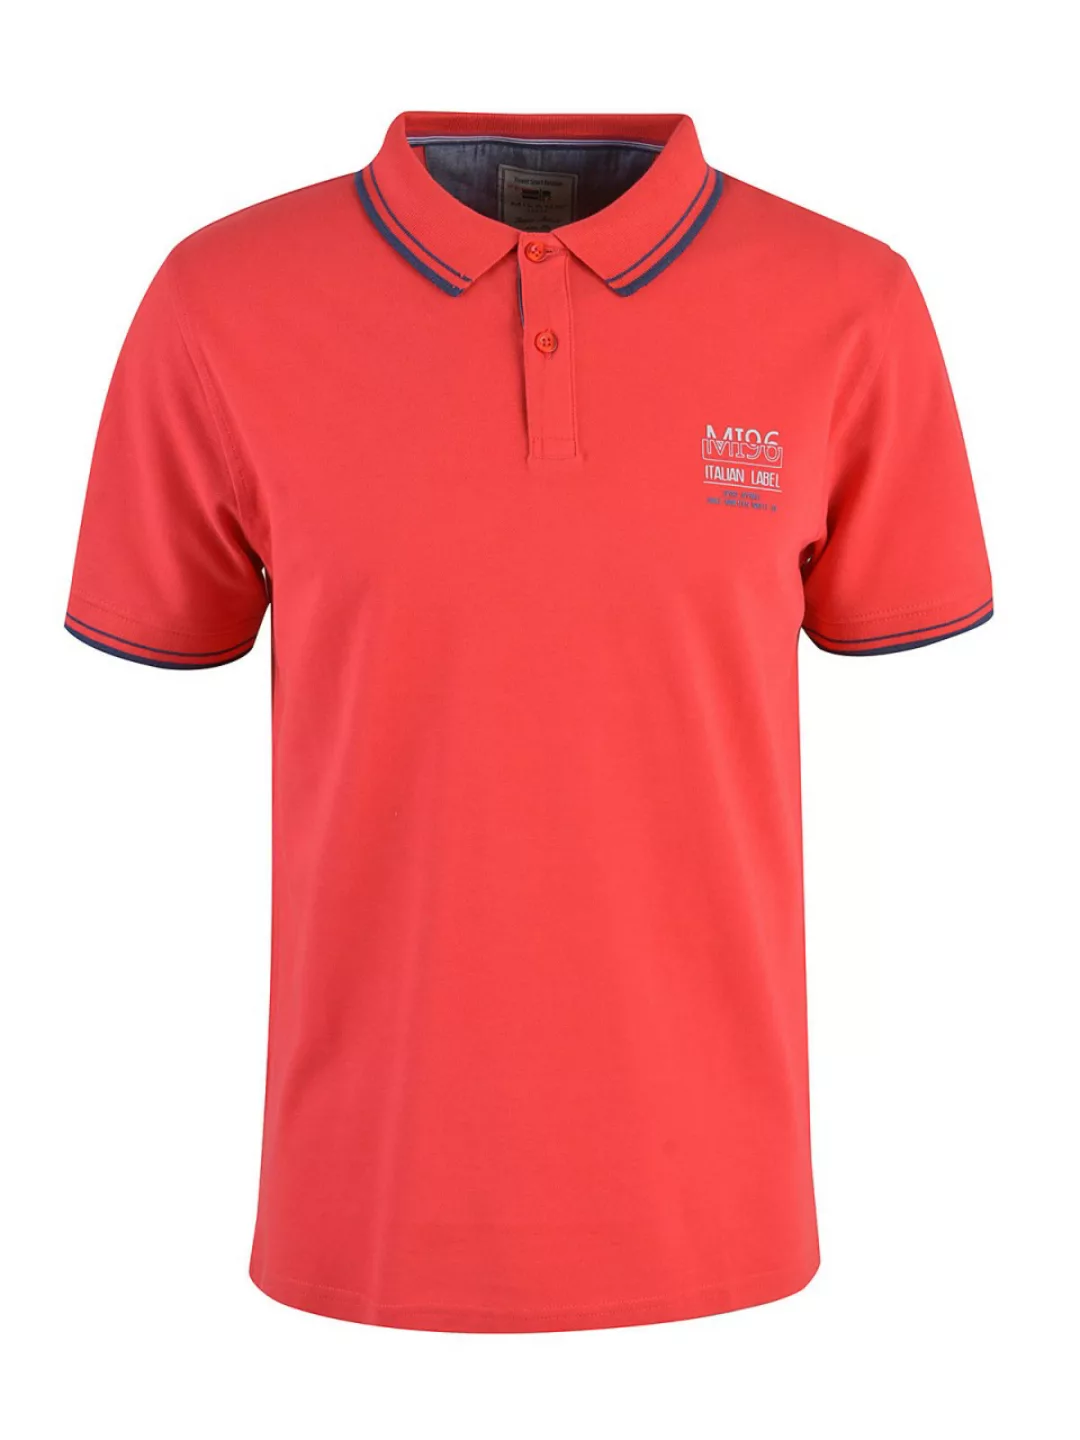 MILANO ITALY Herren Poloshirt, rot günstig online kaufen